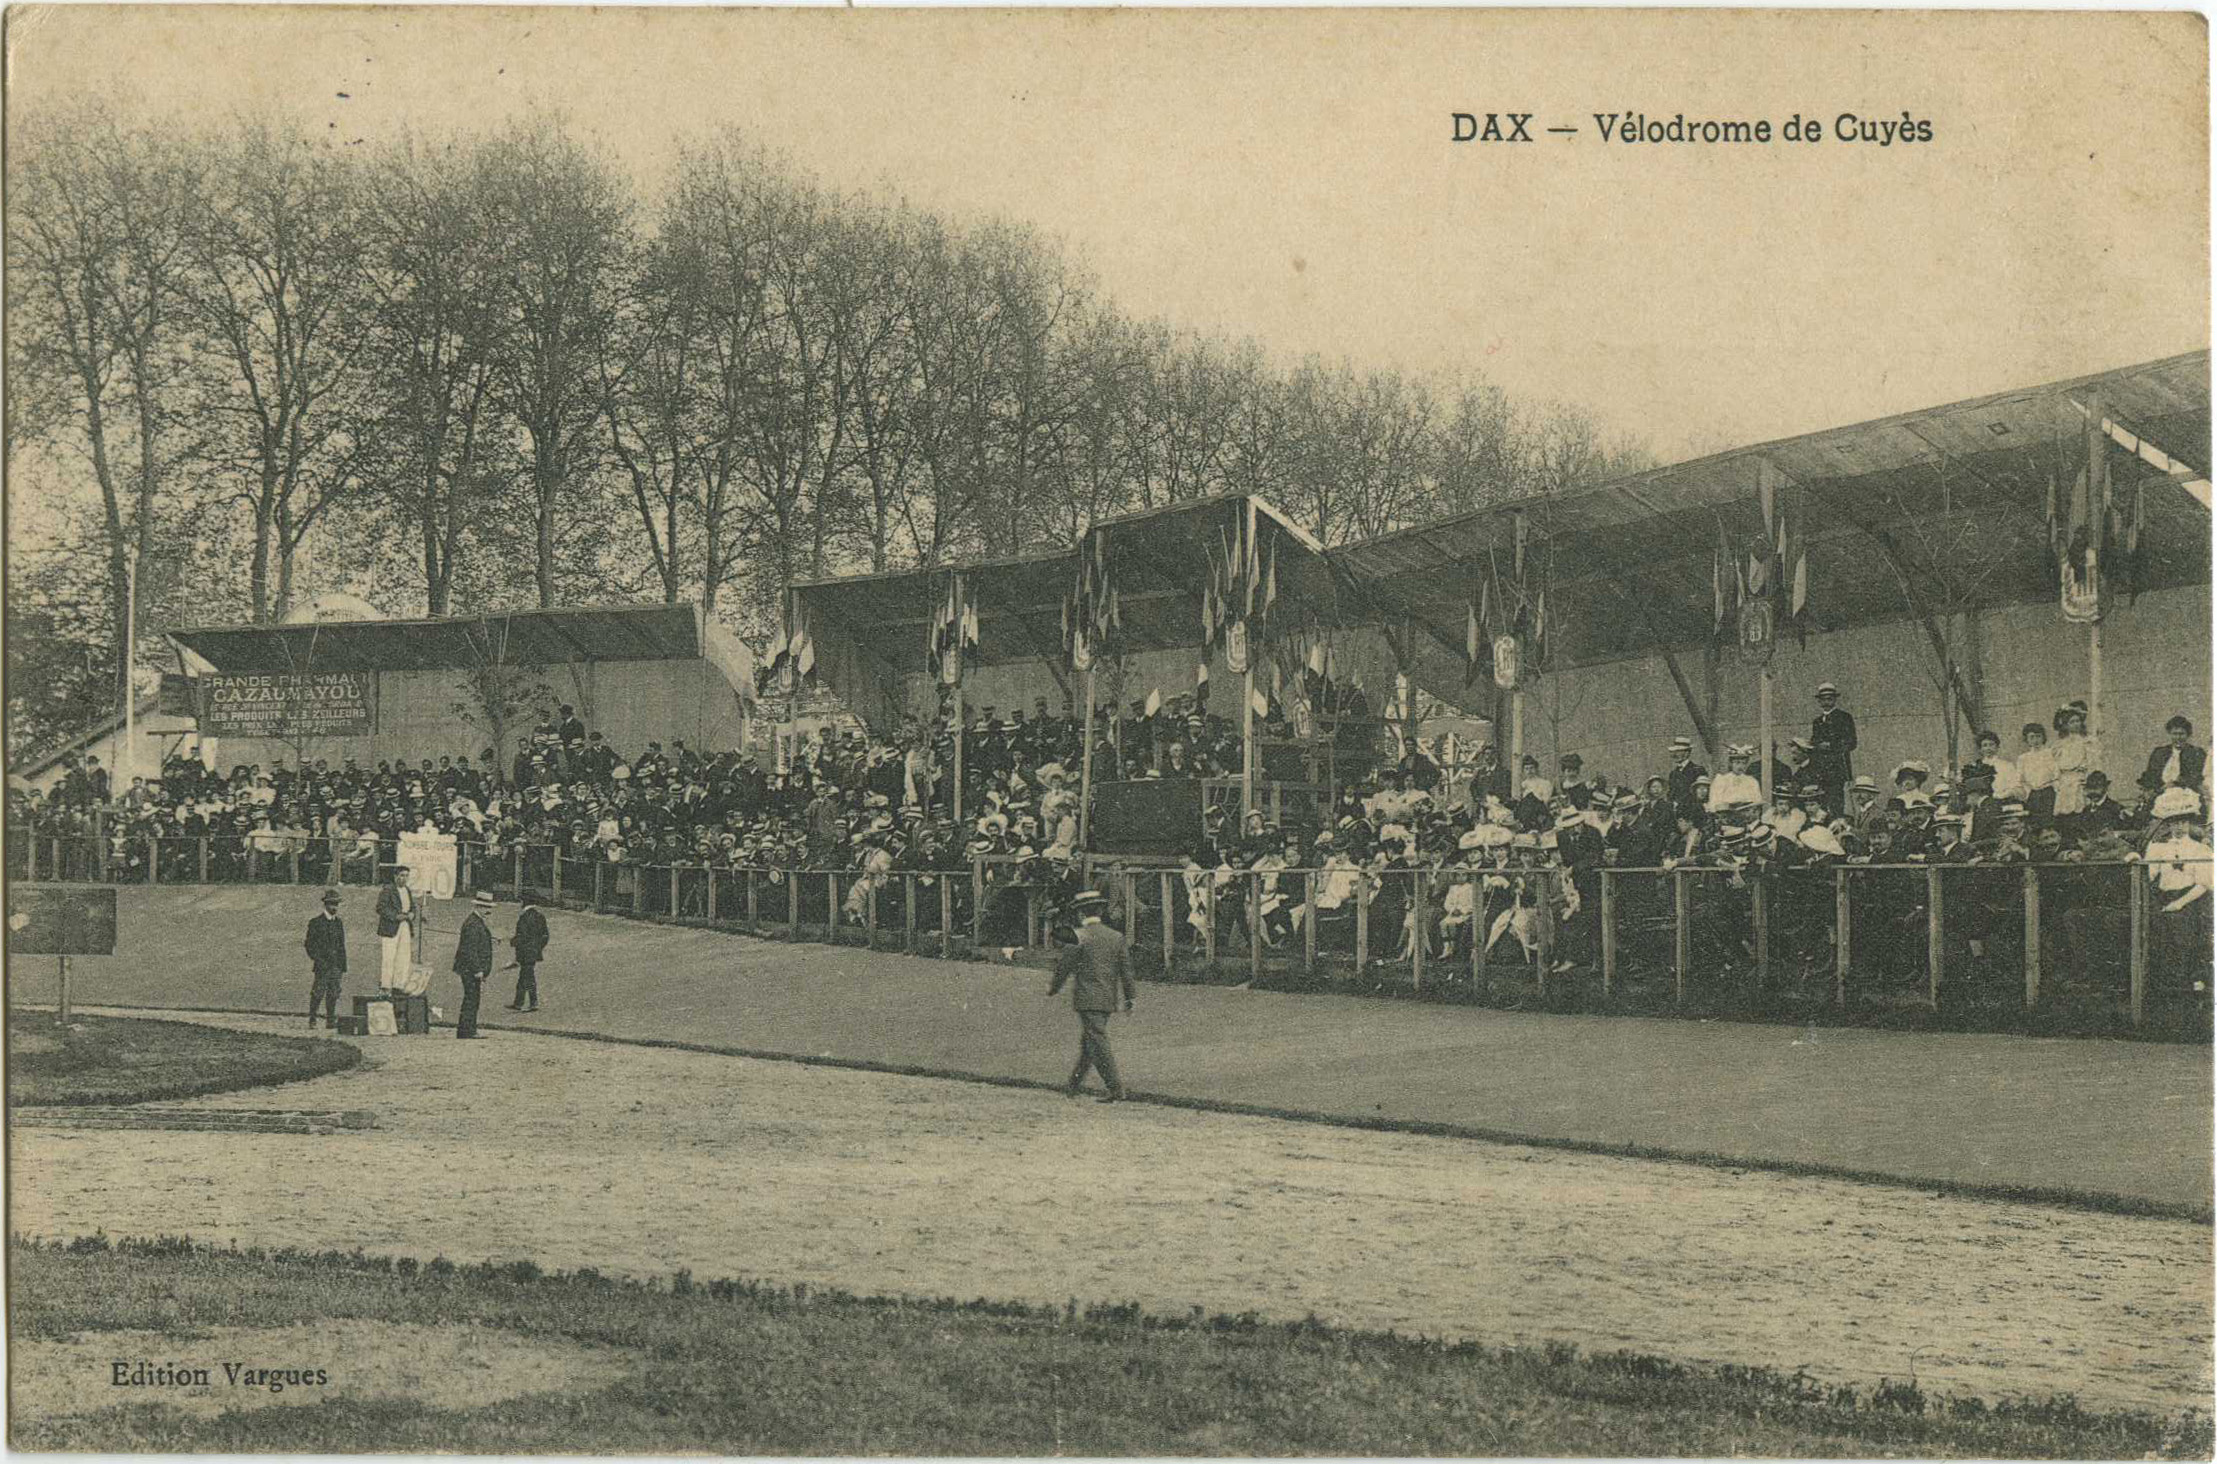 Dax - Vélodrome de Cuyès